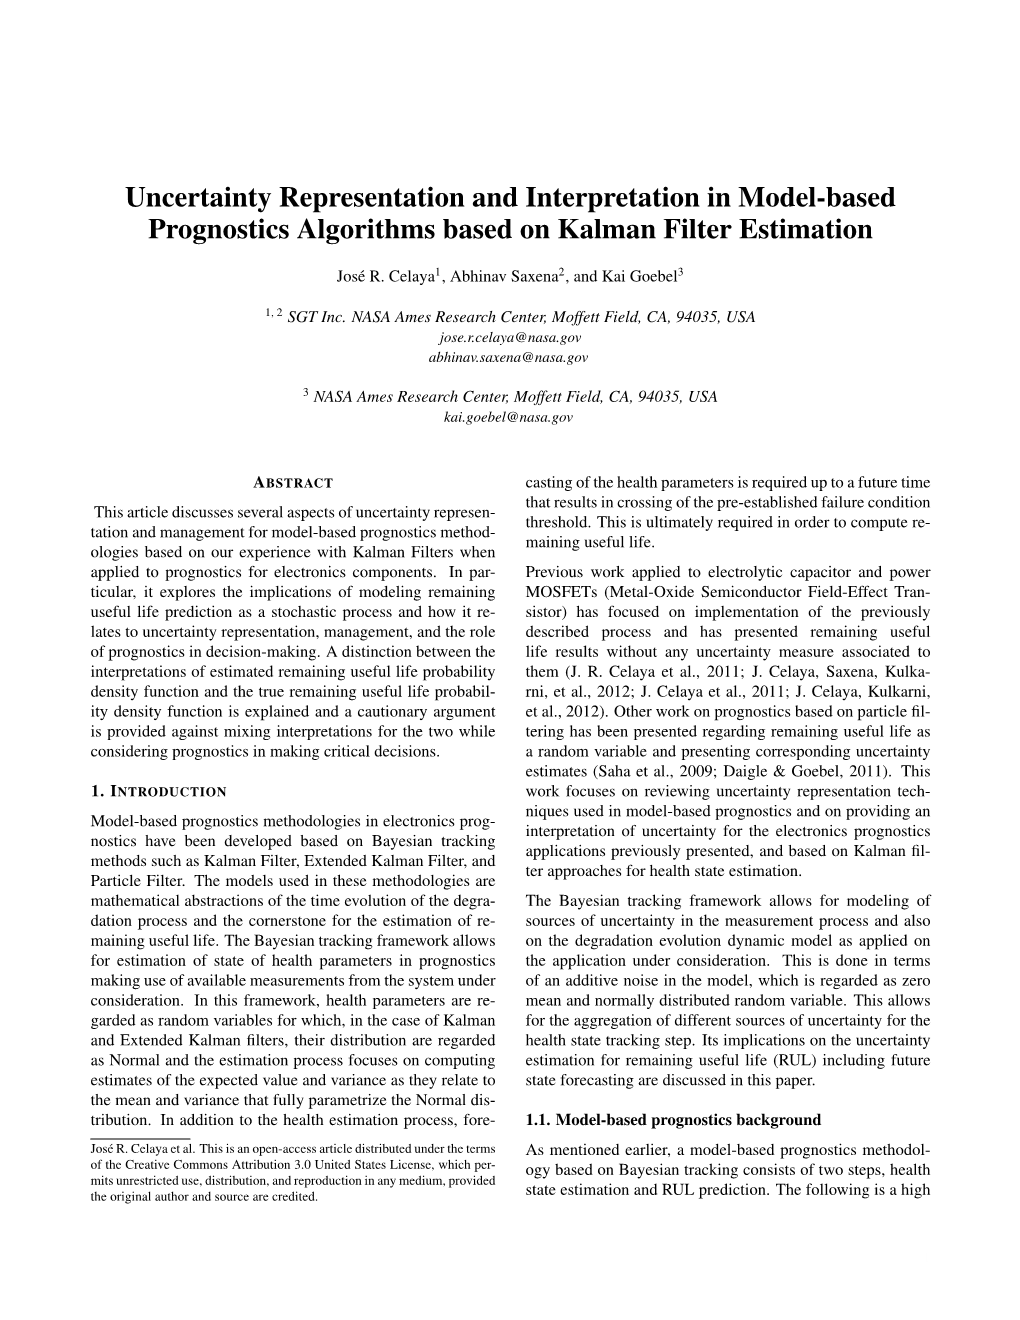 Uncertainty Representation and Interpretation in Model-Based Prognostics Algorithms Based on Kalman Filter Estimation